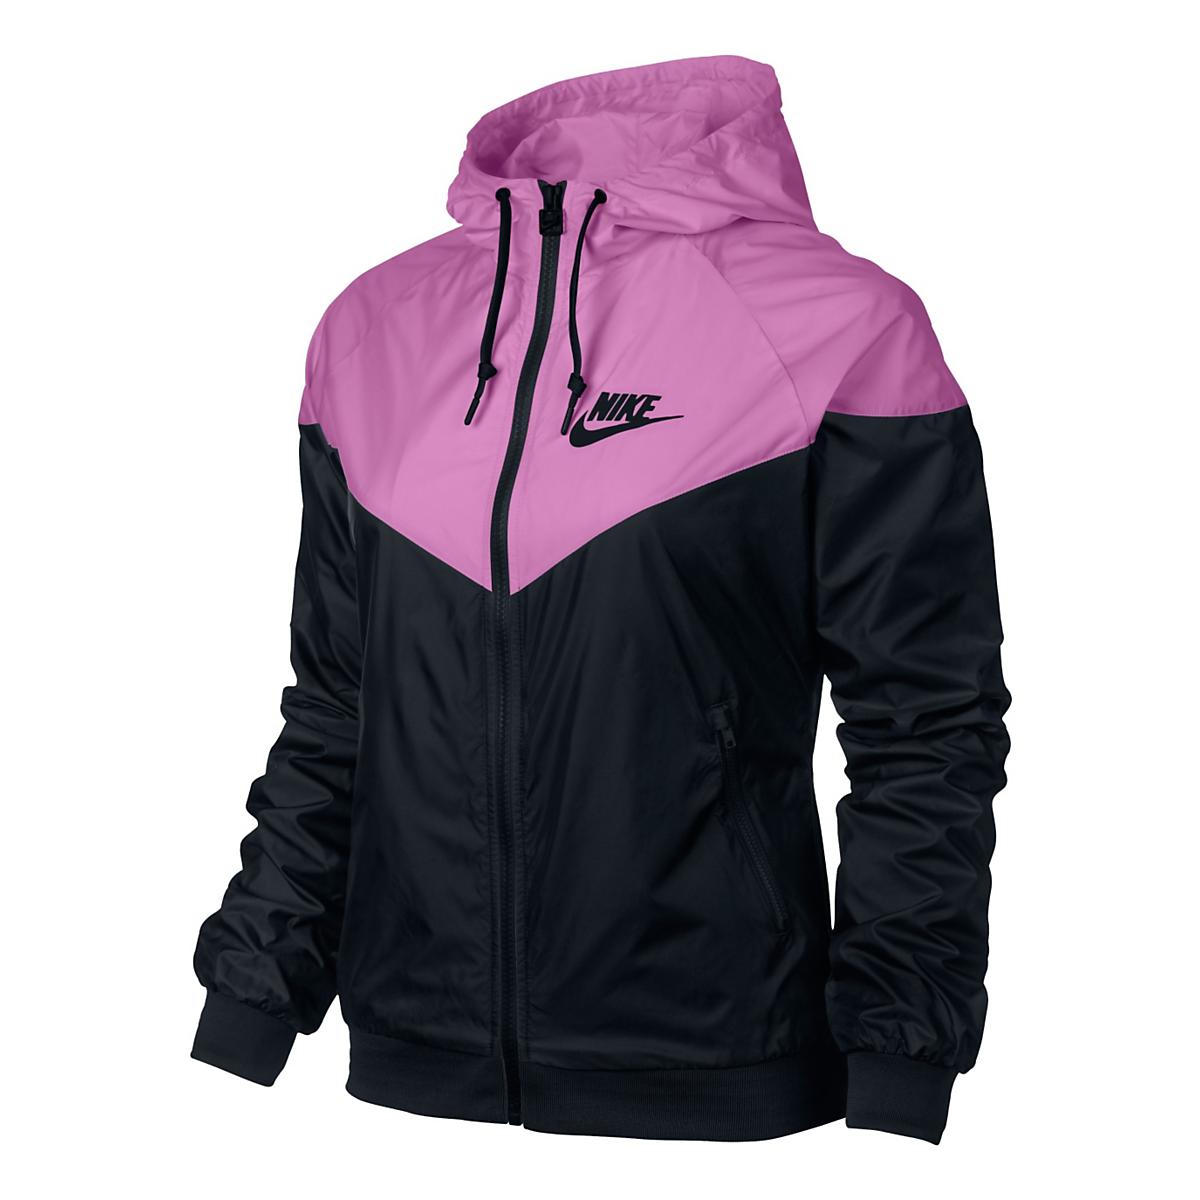 Womens Nike Windrunner Running Jackets at Road Runner Sports